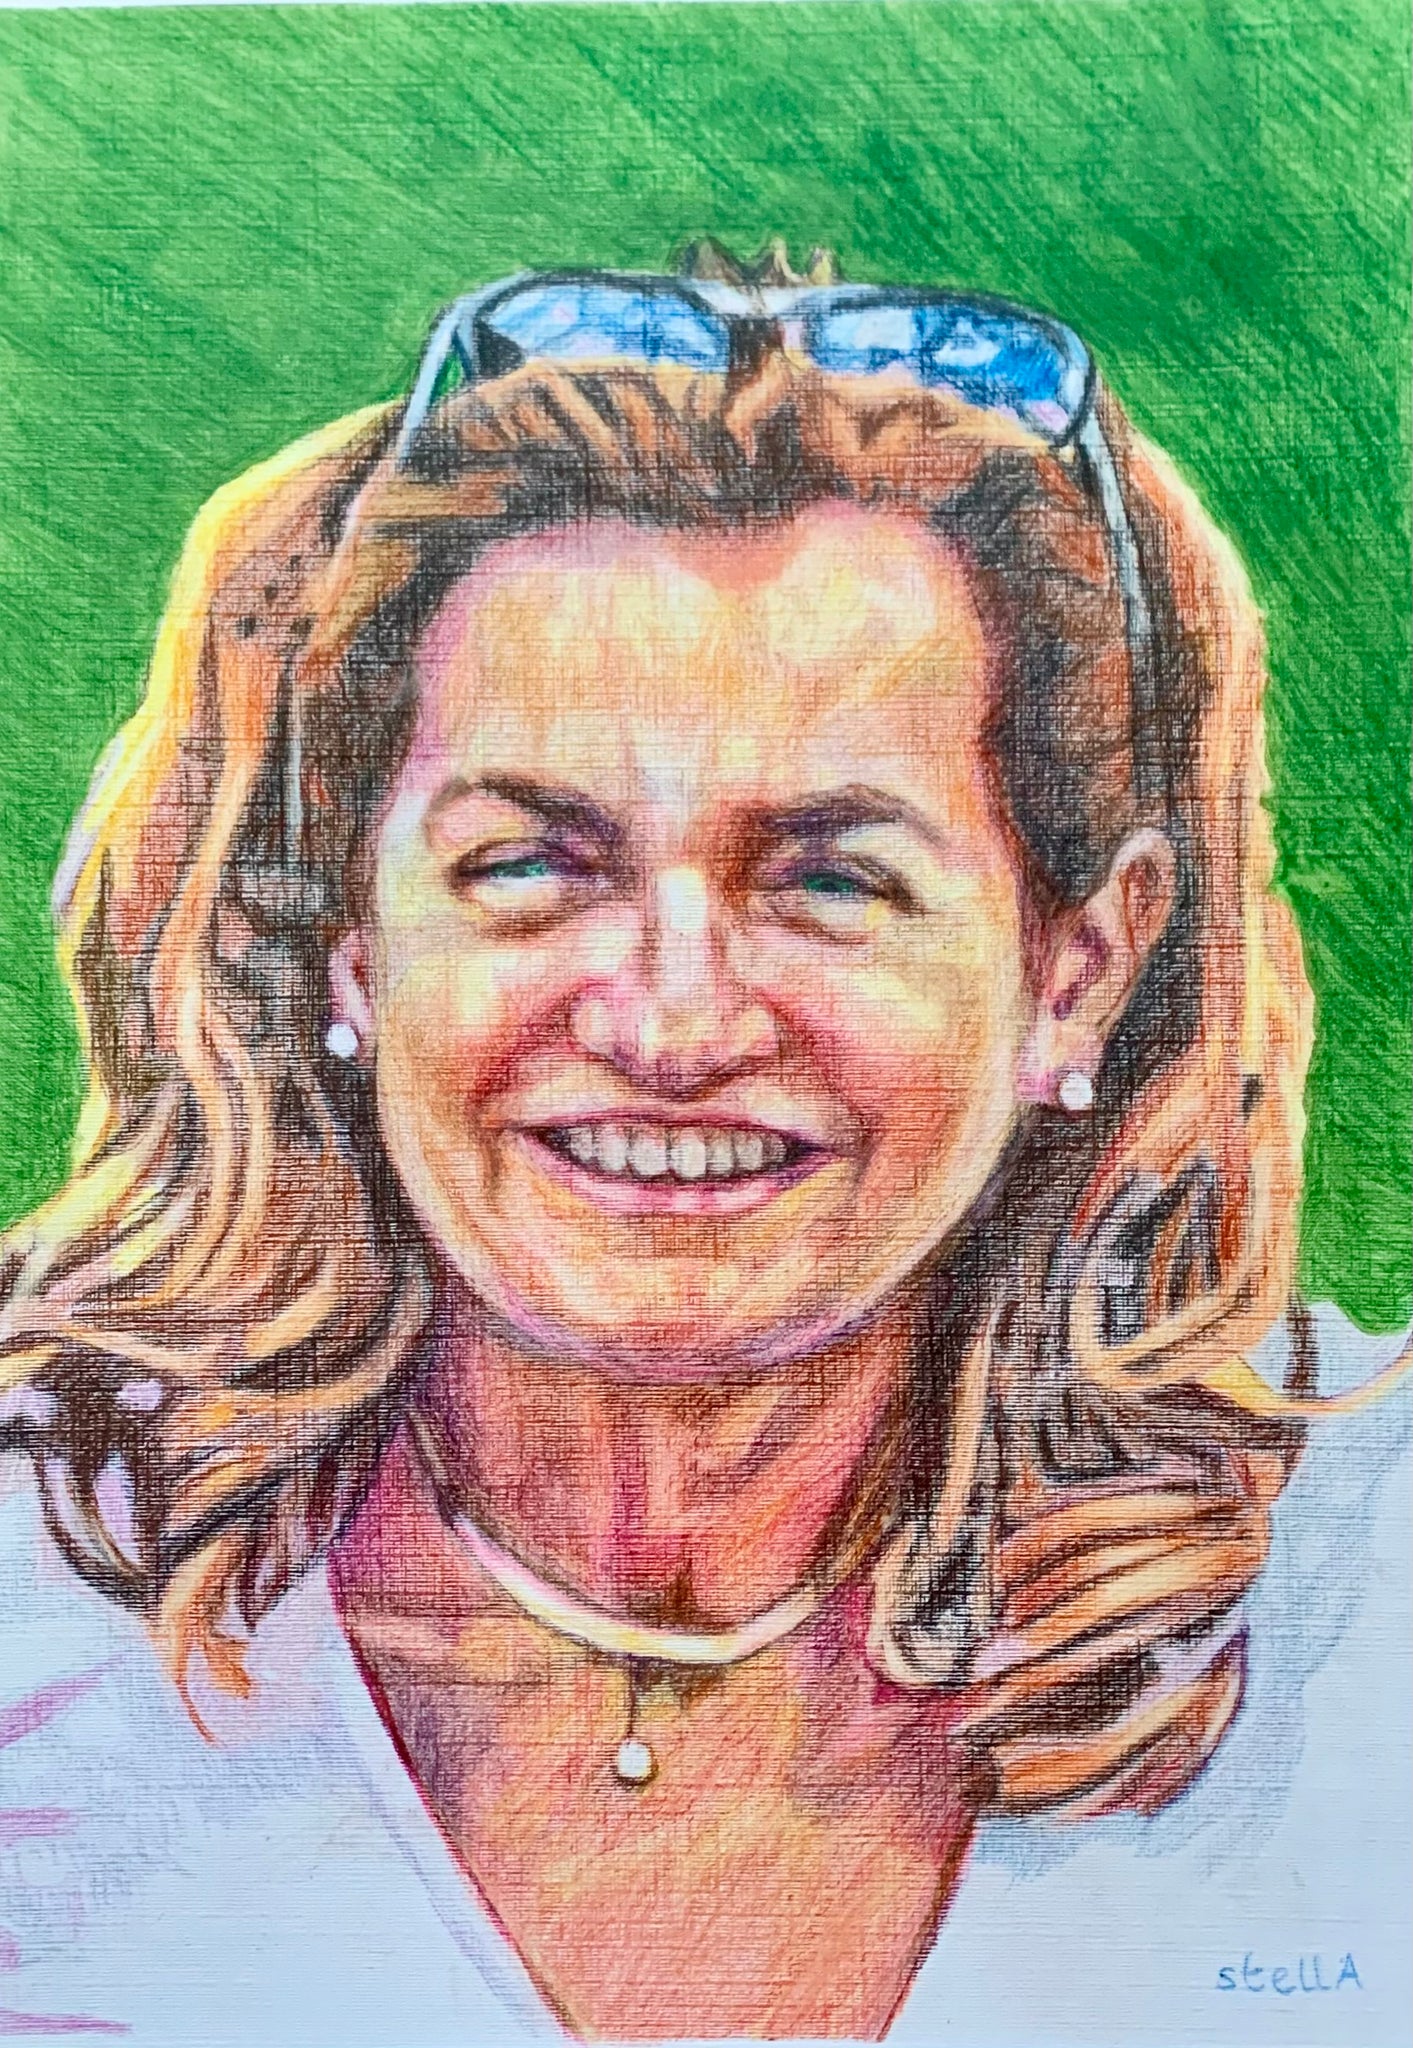 Roberta drawn posthumous drawn portrait by Stella Tooth artist